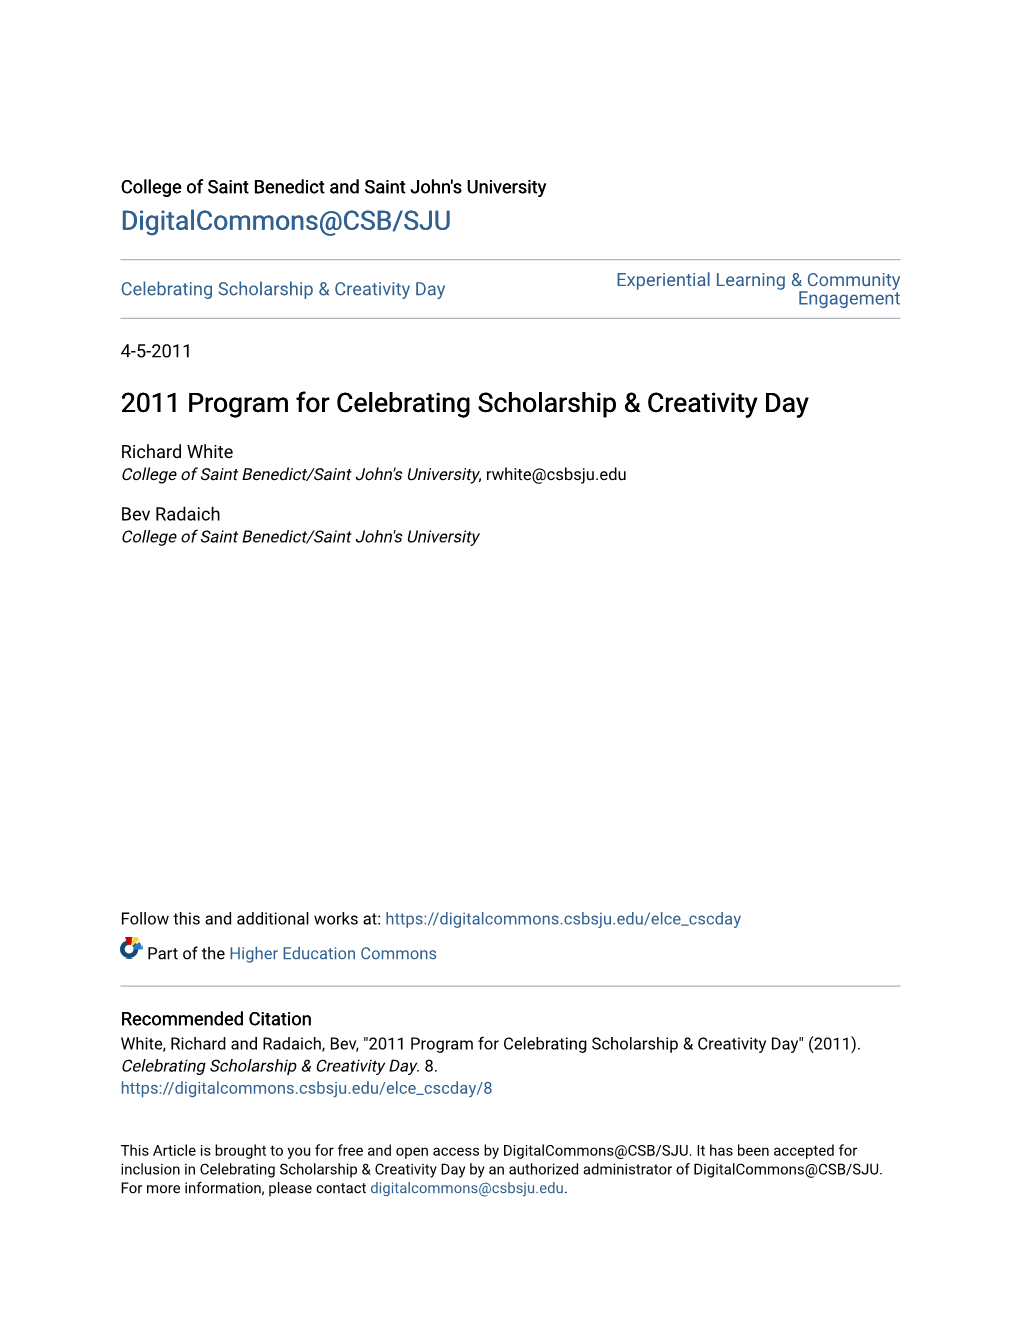 2011 Program for Celebrating Scholarship & Creativity